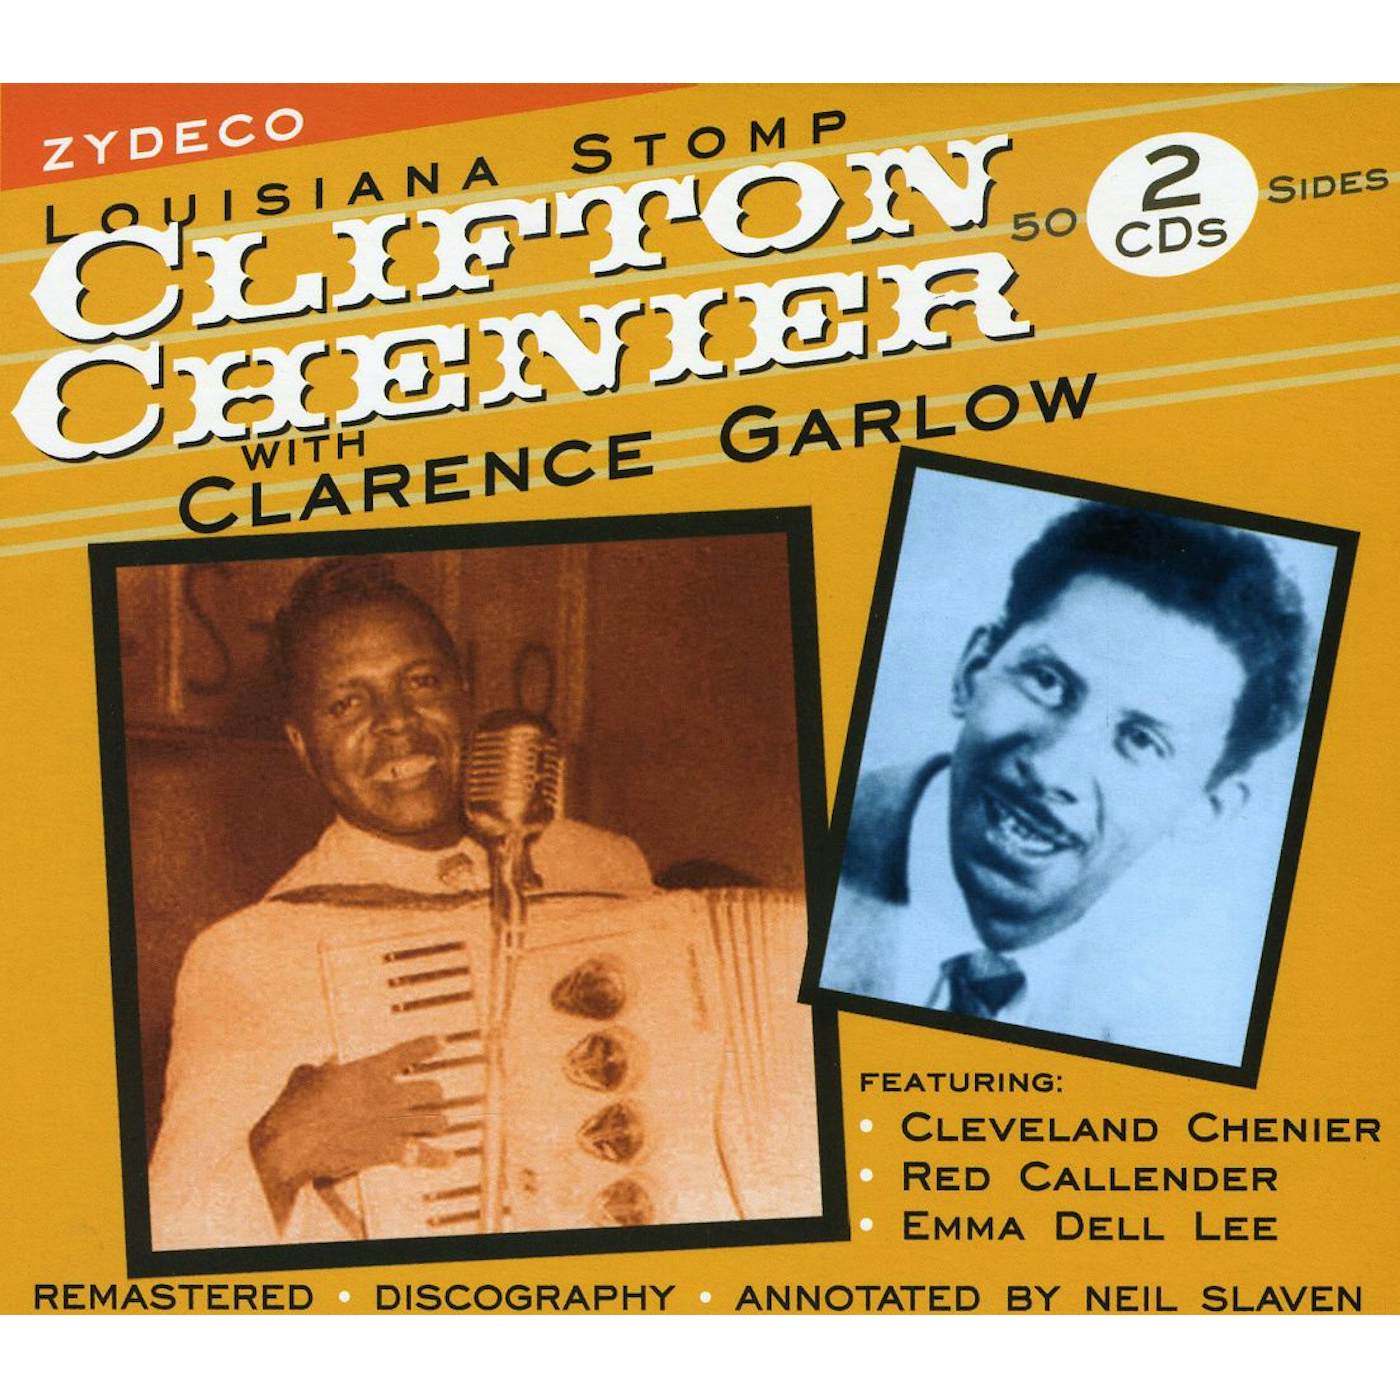 LOUISIANA STOMP-CLIFTON CHENIER WITH CLARENCE CD